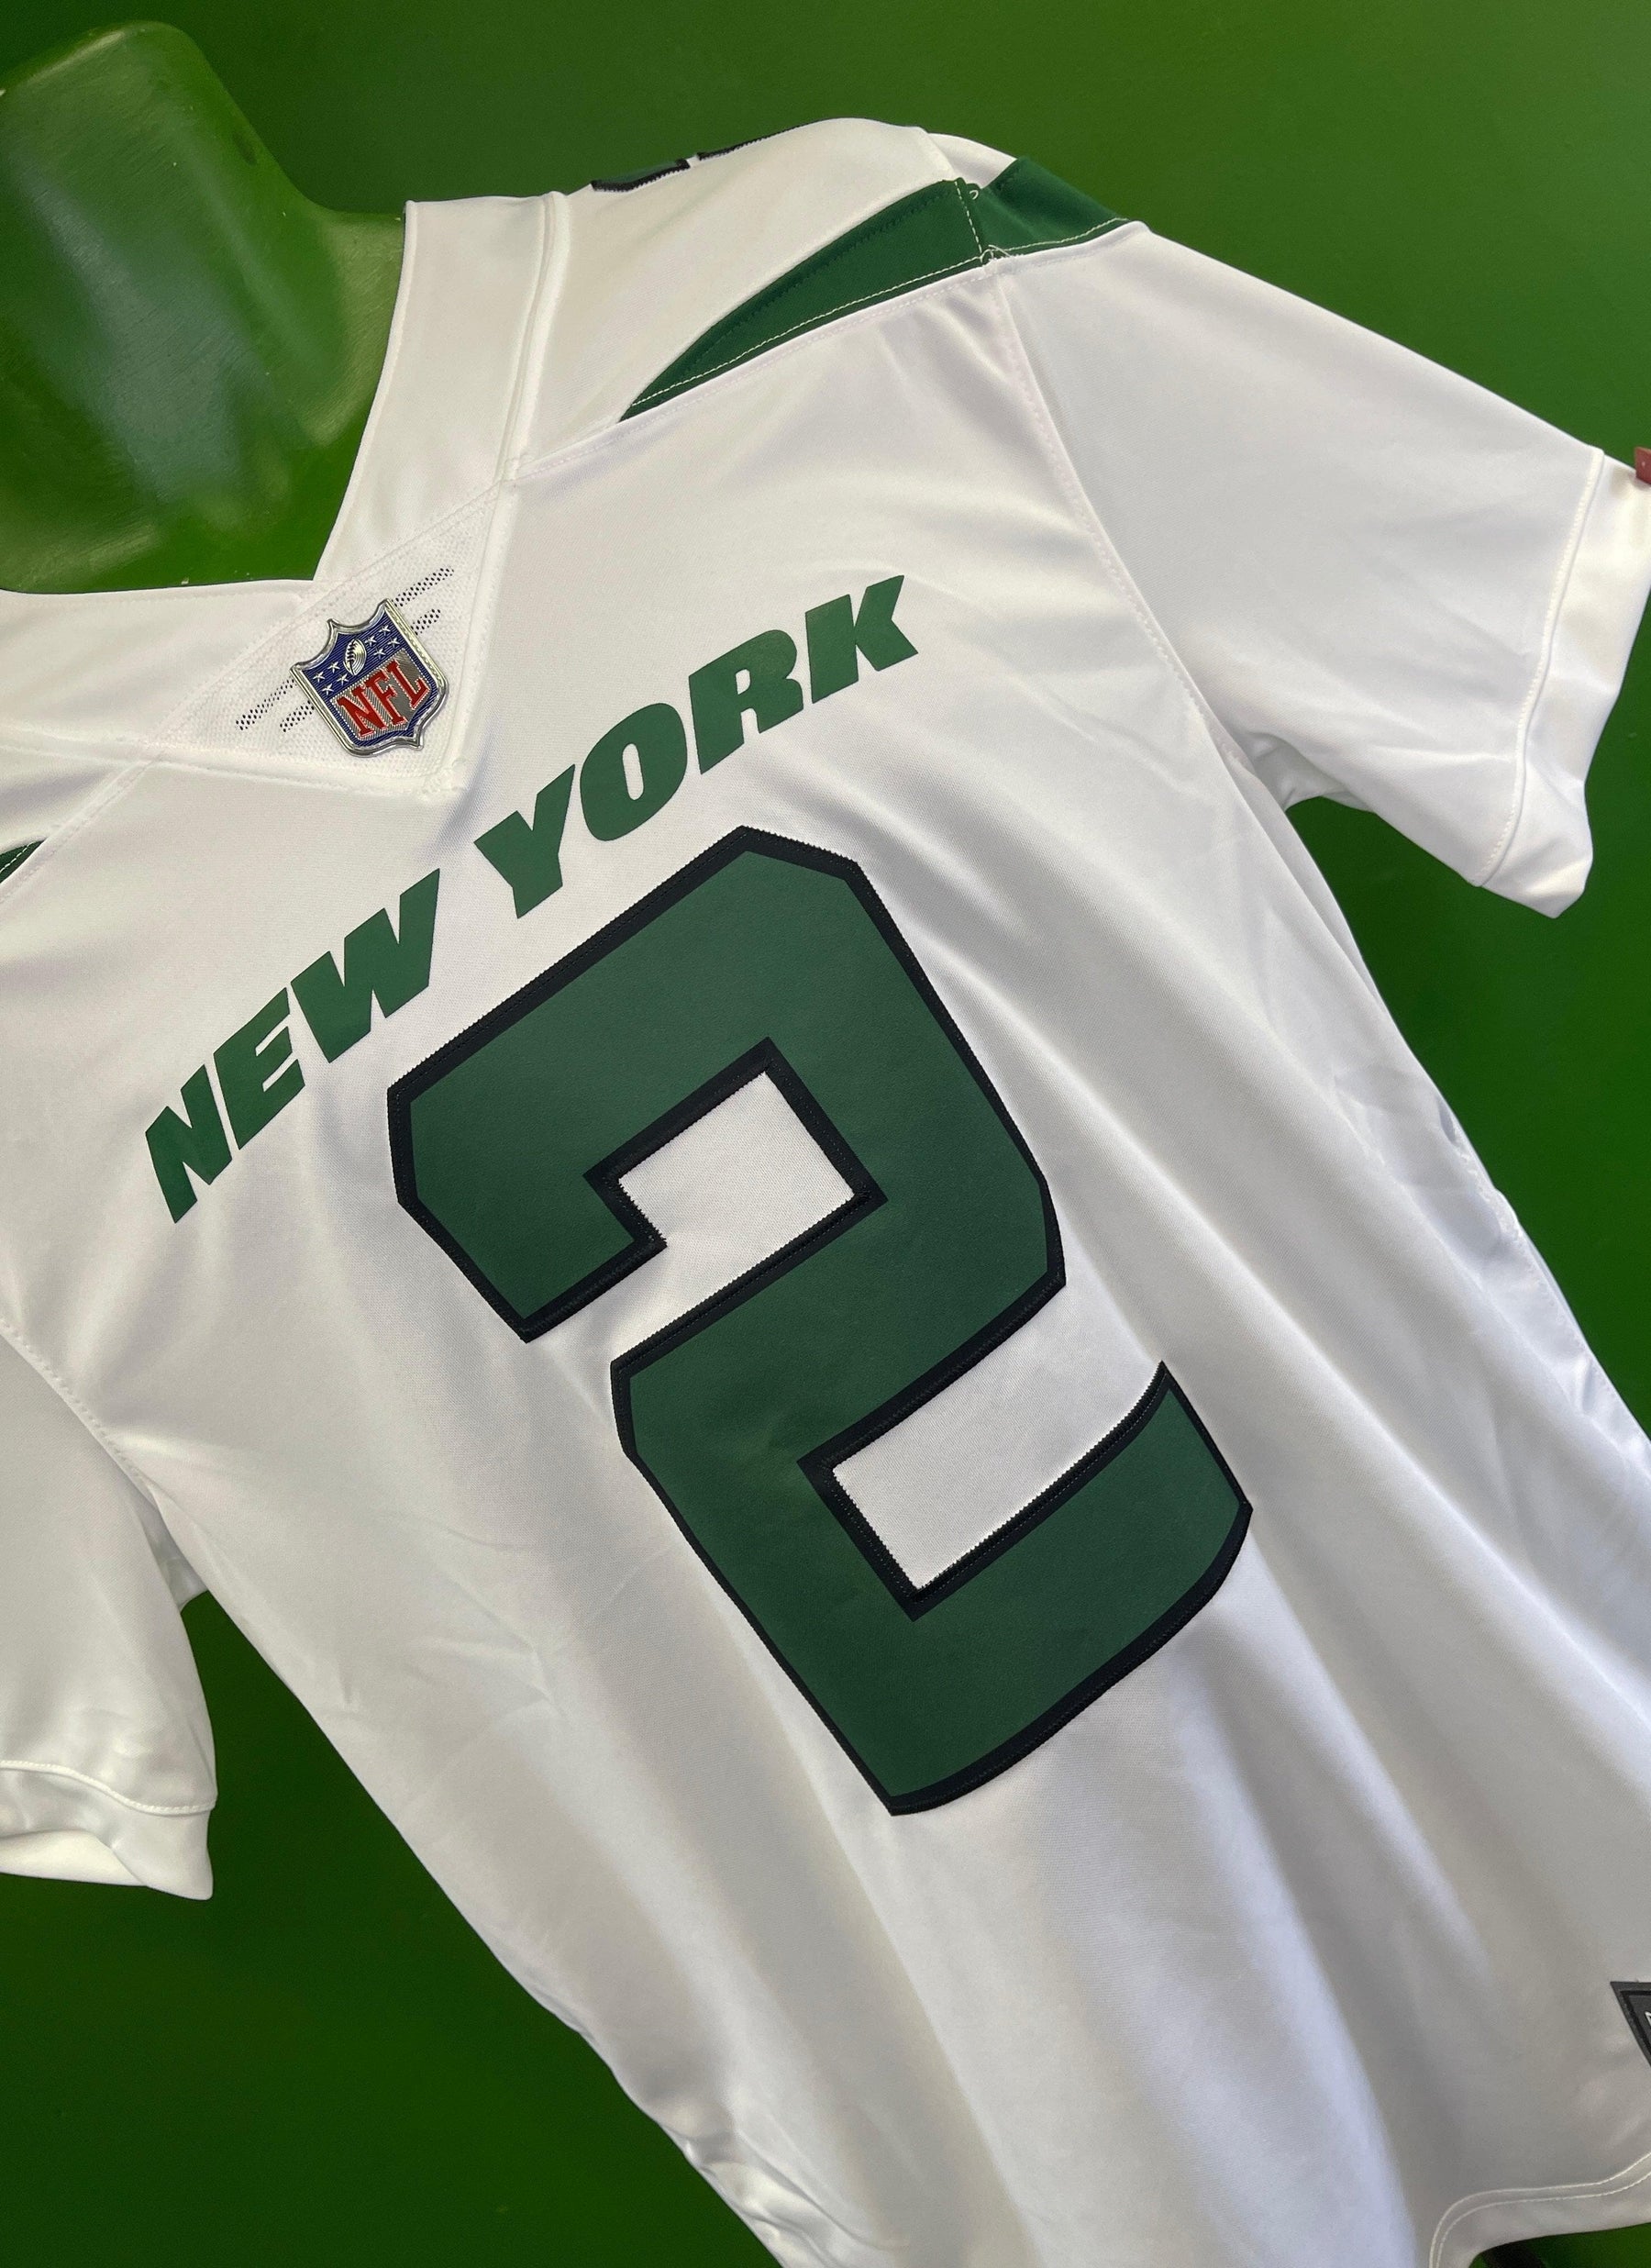 Nike Men's New York Jets Zach Wilson #2 Green Game Jersey